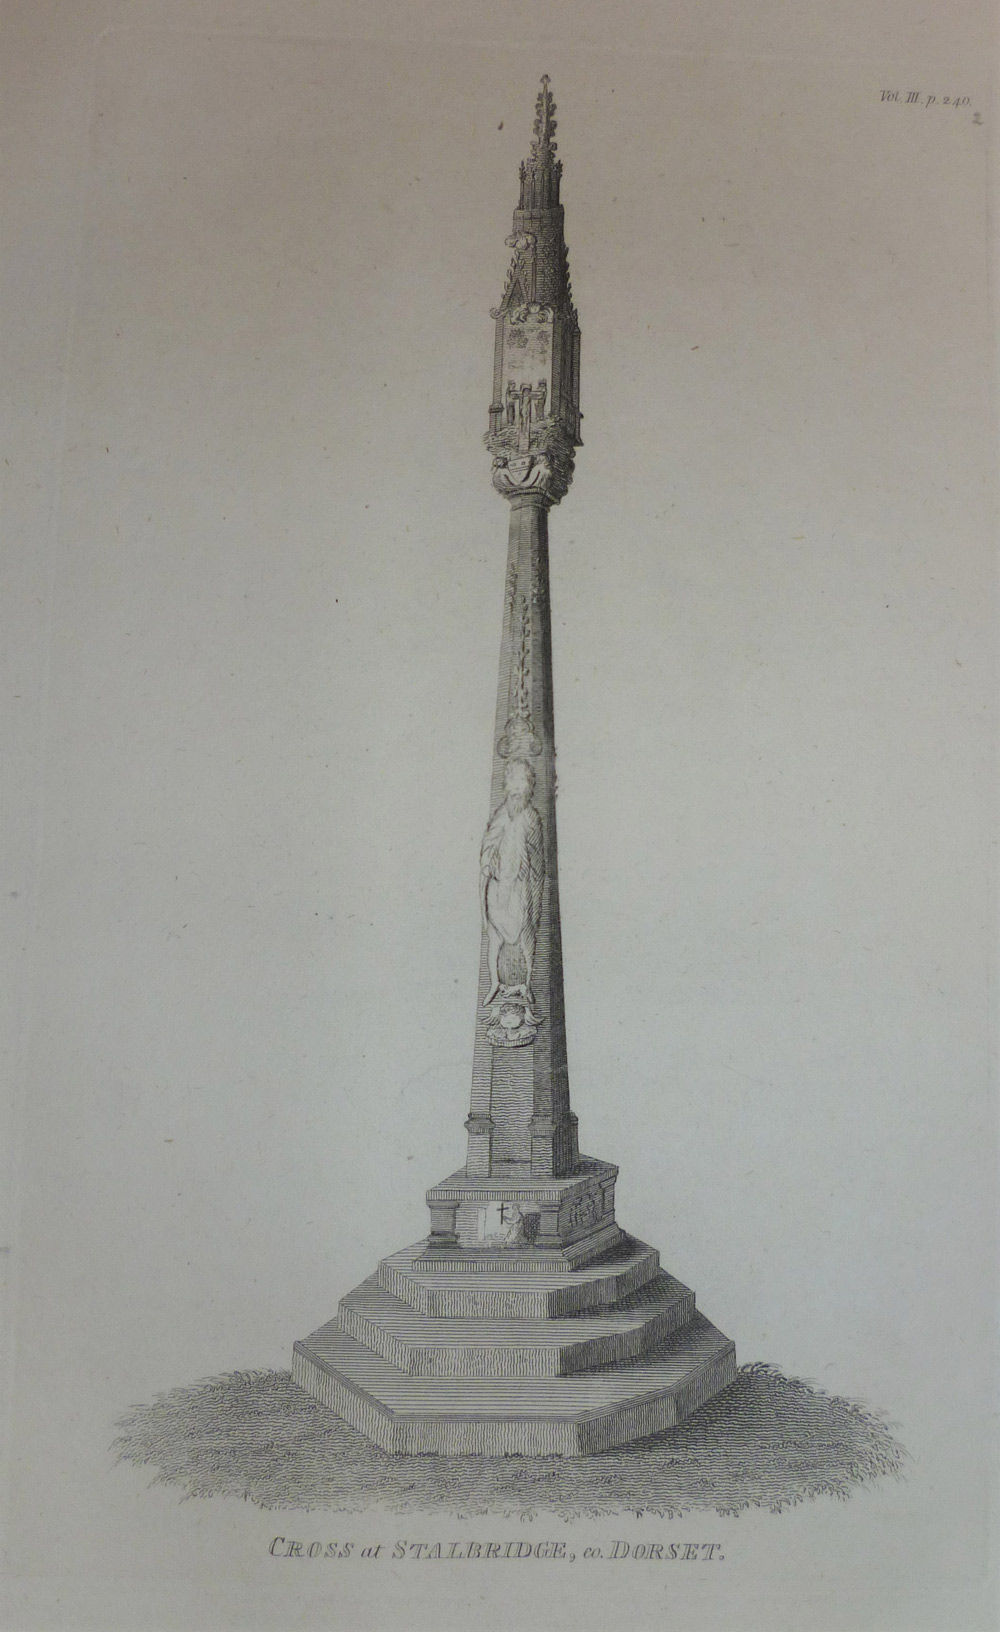 Stalbridge Market Cross (John Hutchins’ History of Dorset, first edition, 1777 courtesy Rachel Hassall, Sherborne School)